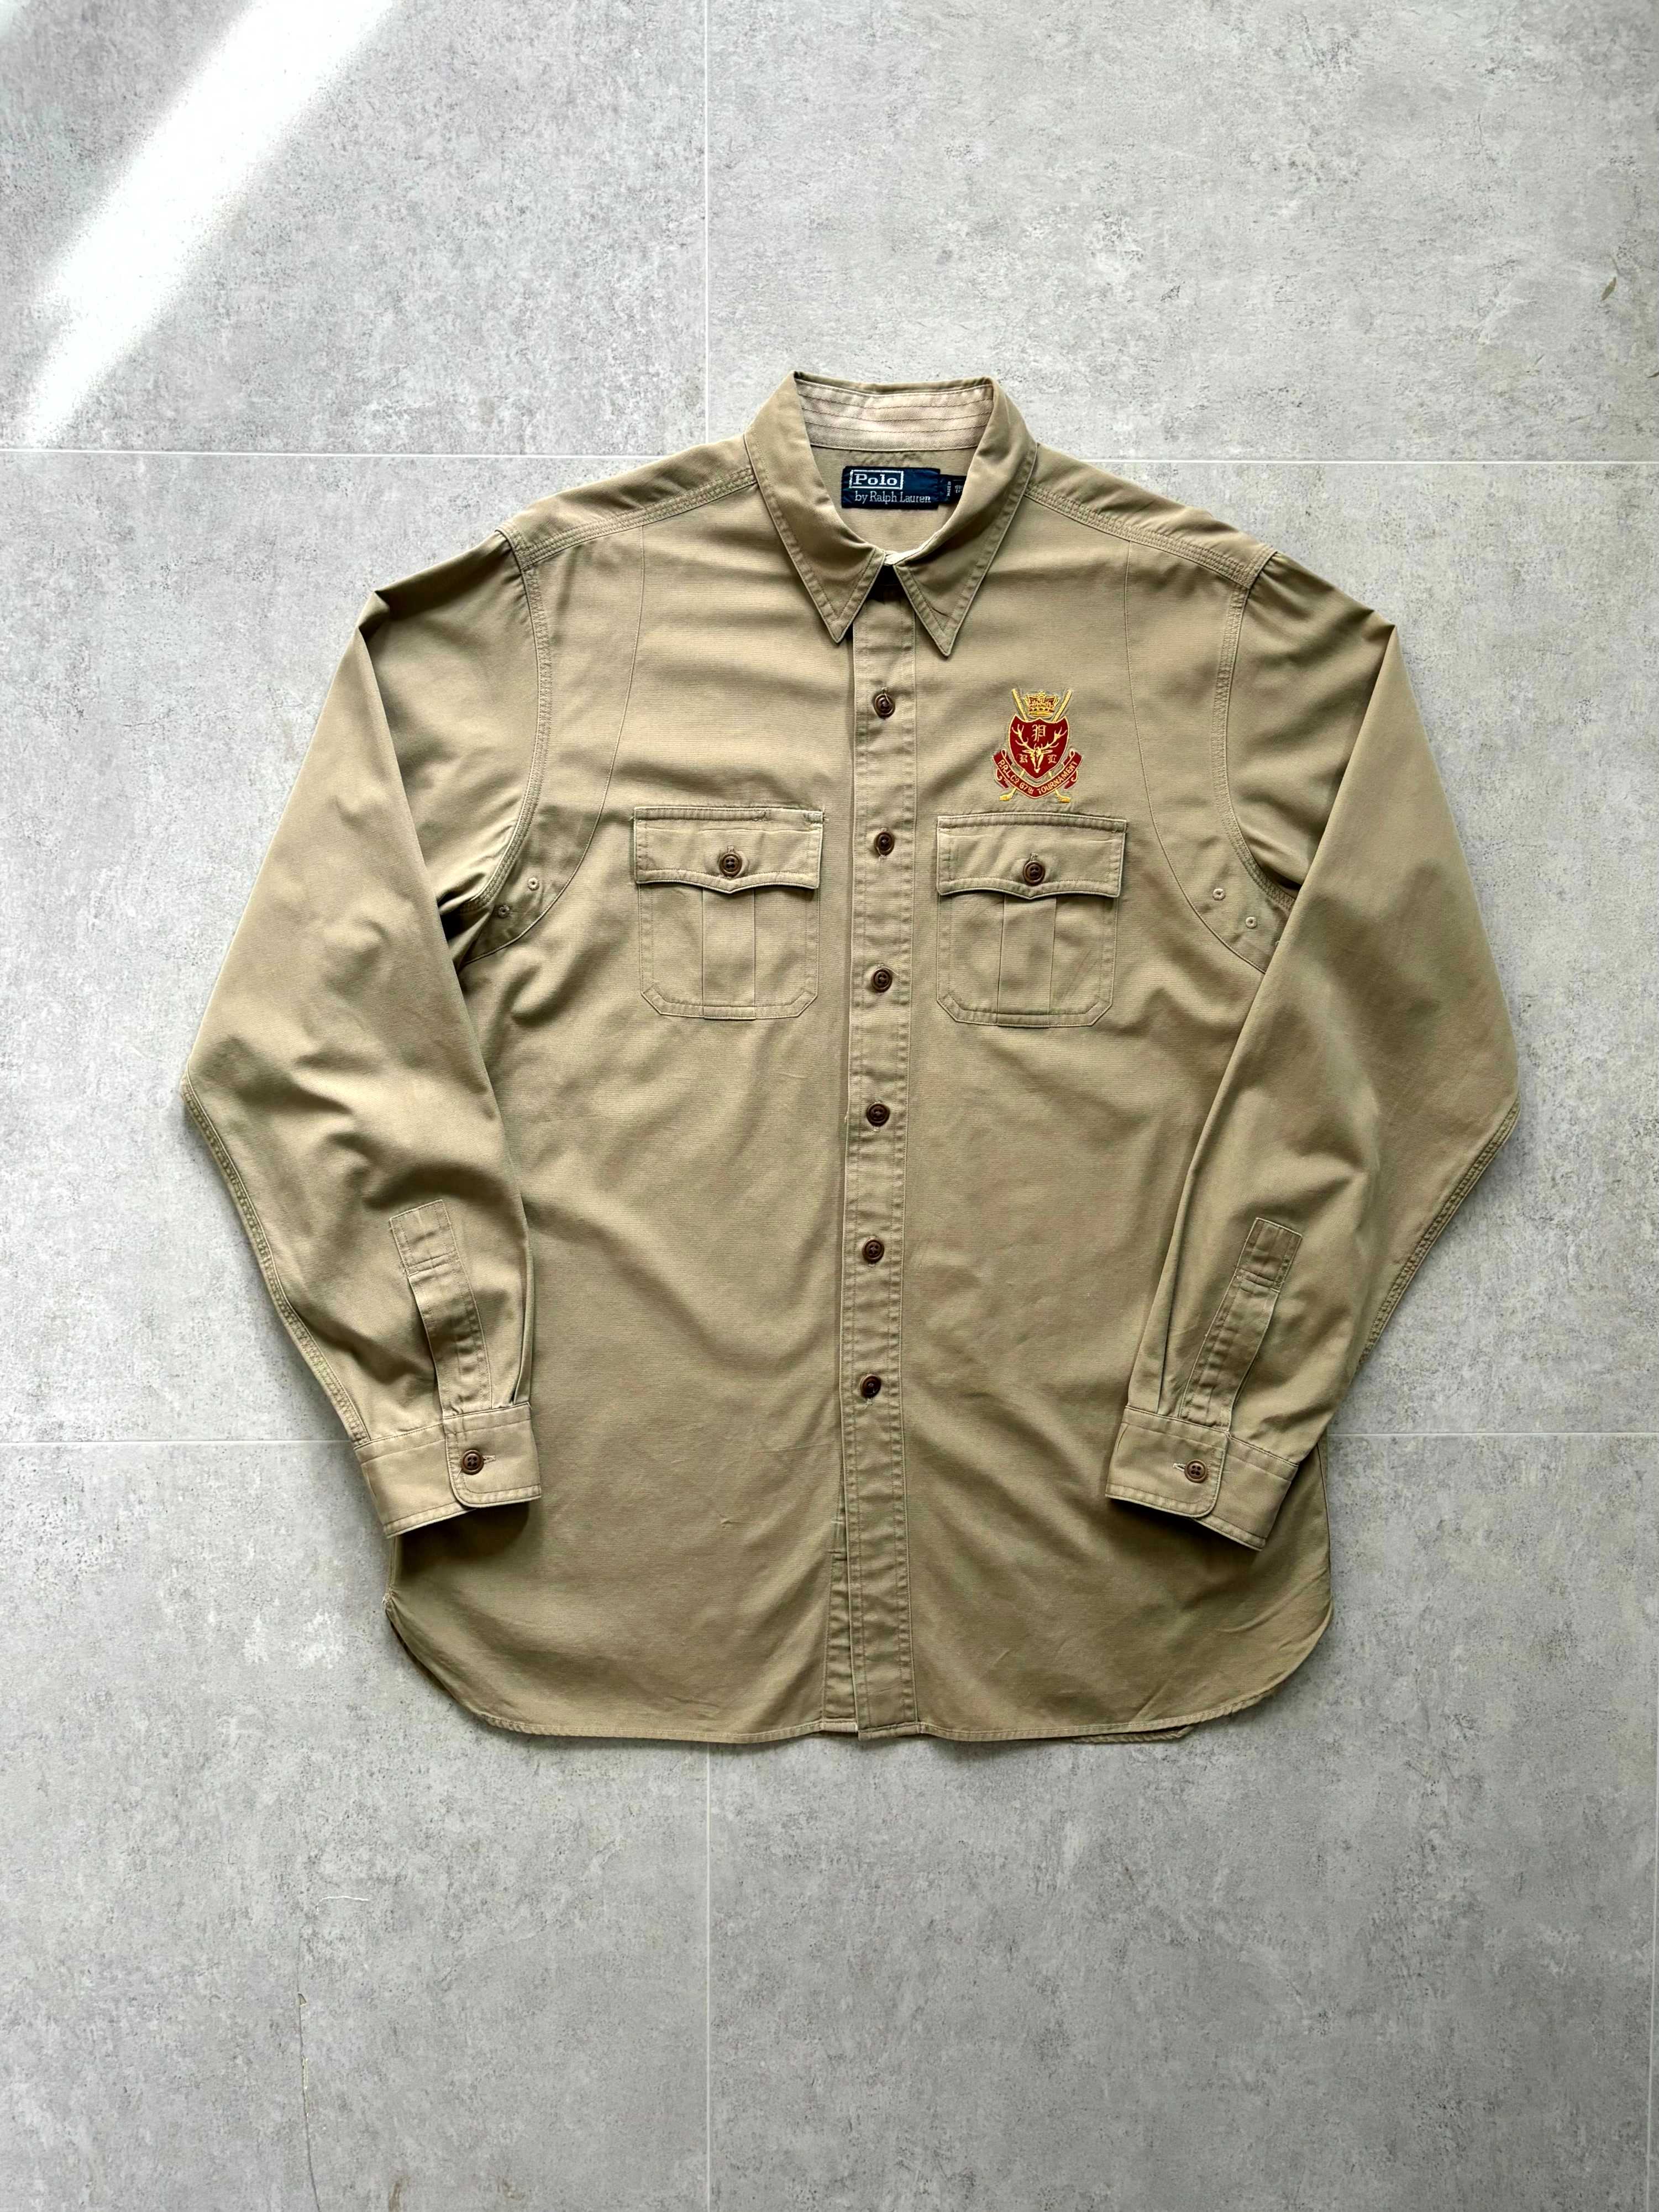 Polo Ralph Lauren Co. 67th Tournament Military Shirt L(100~105) - 체리피커